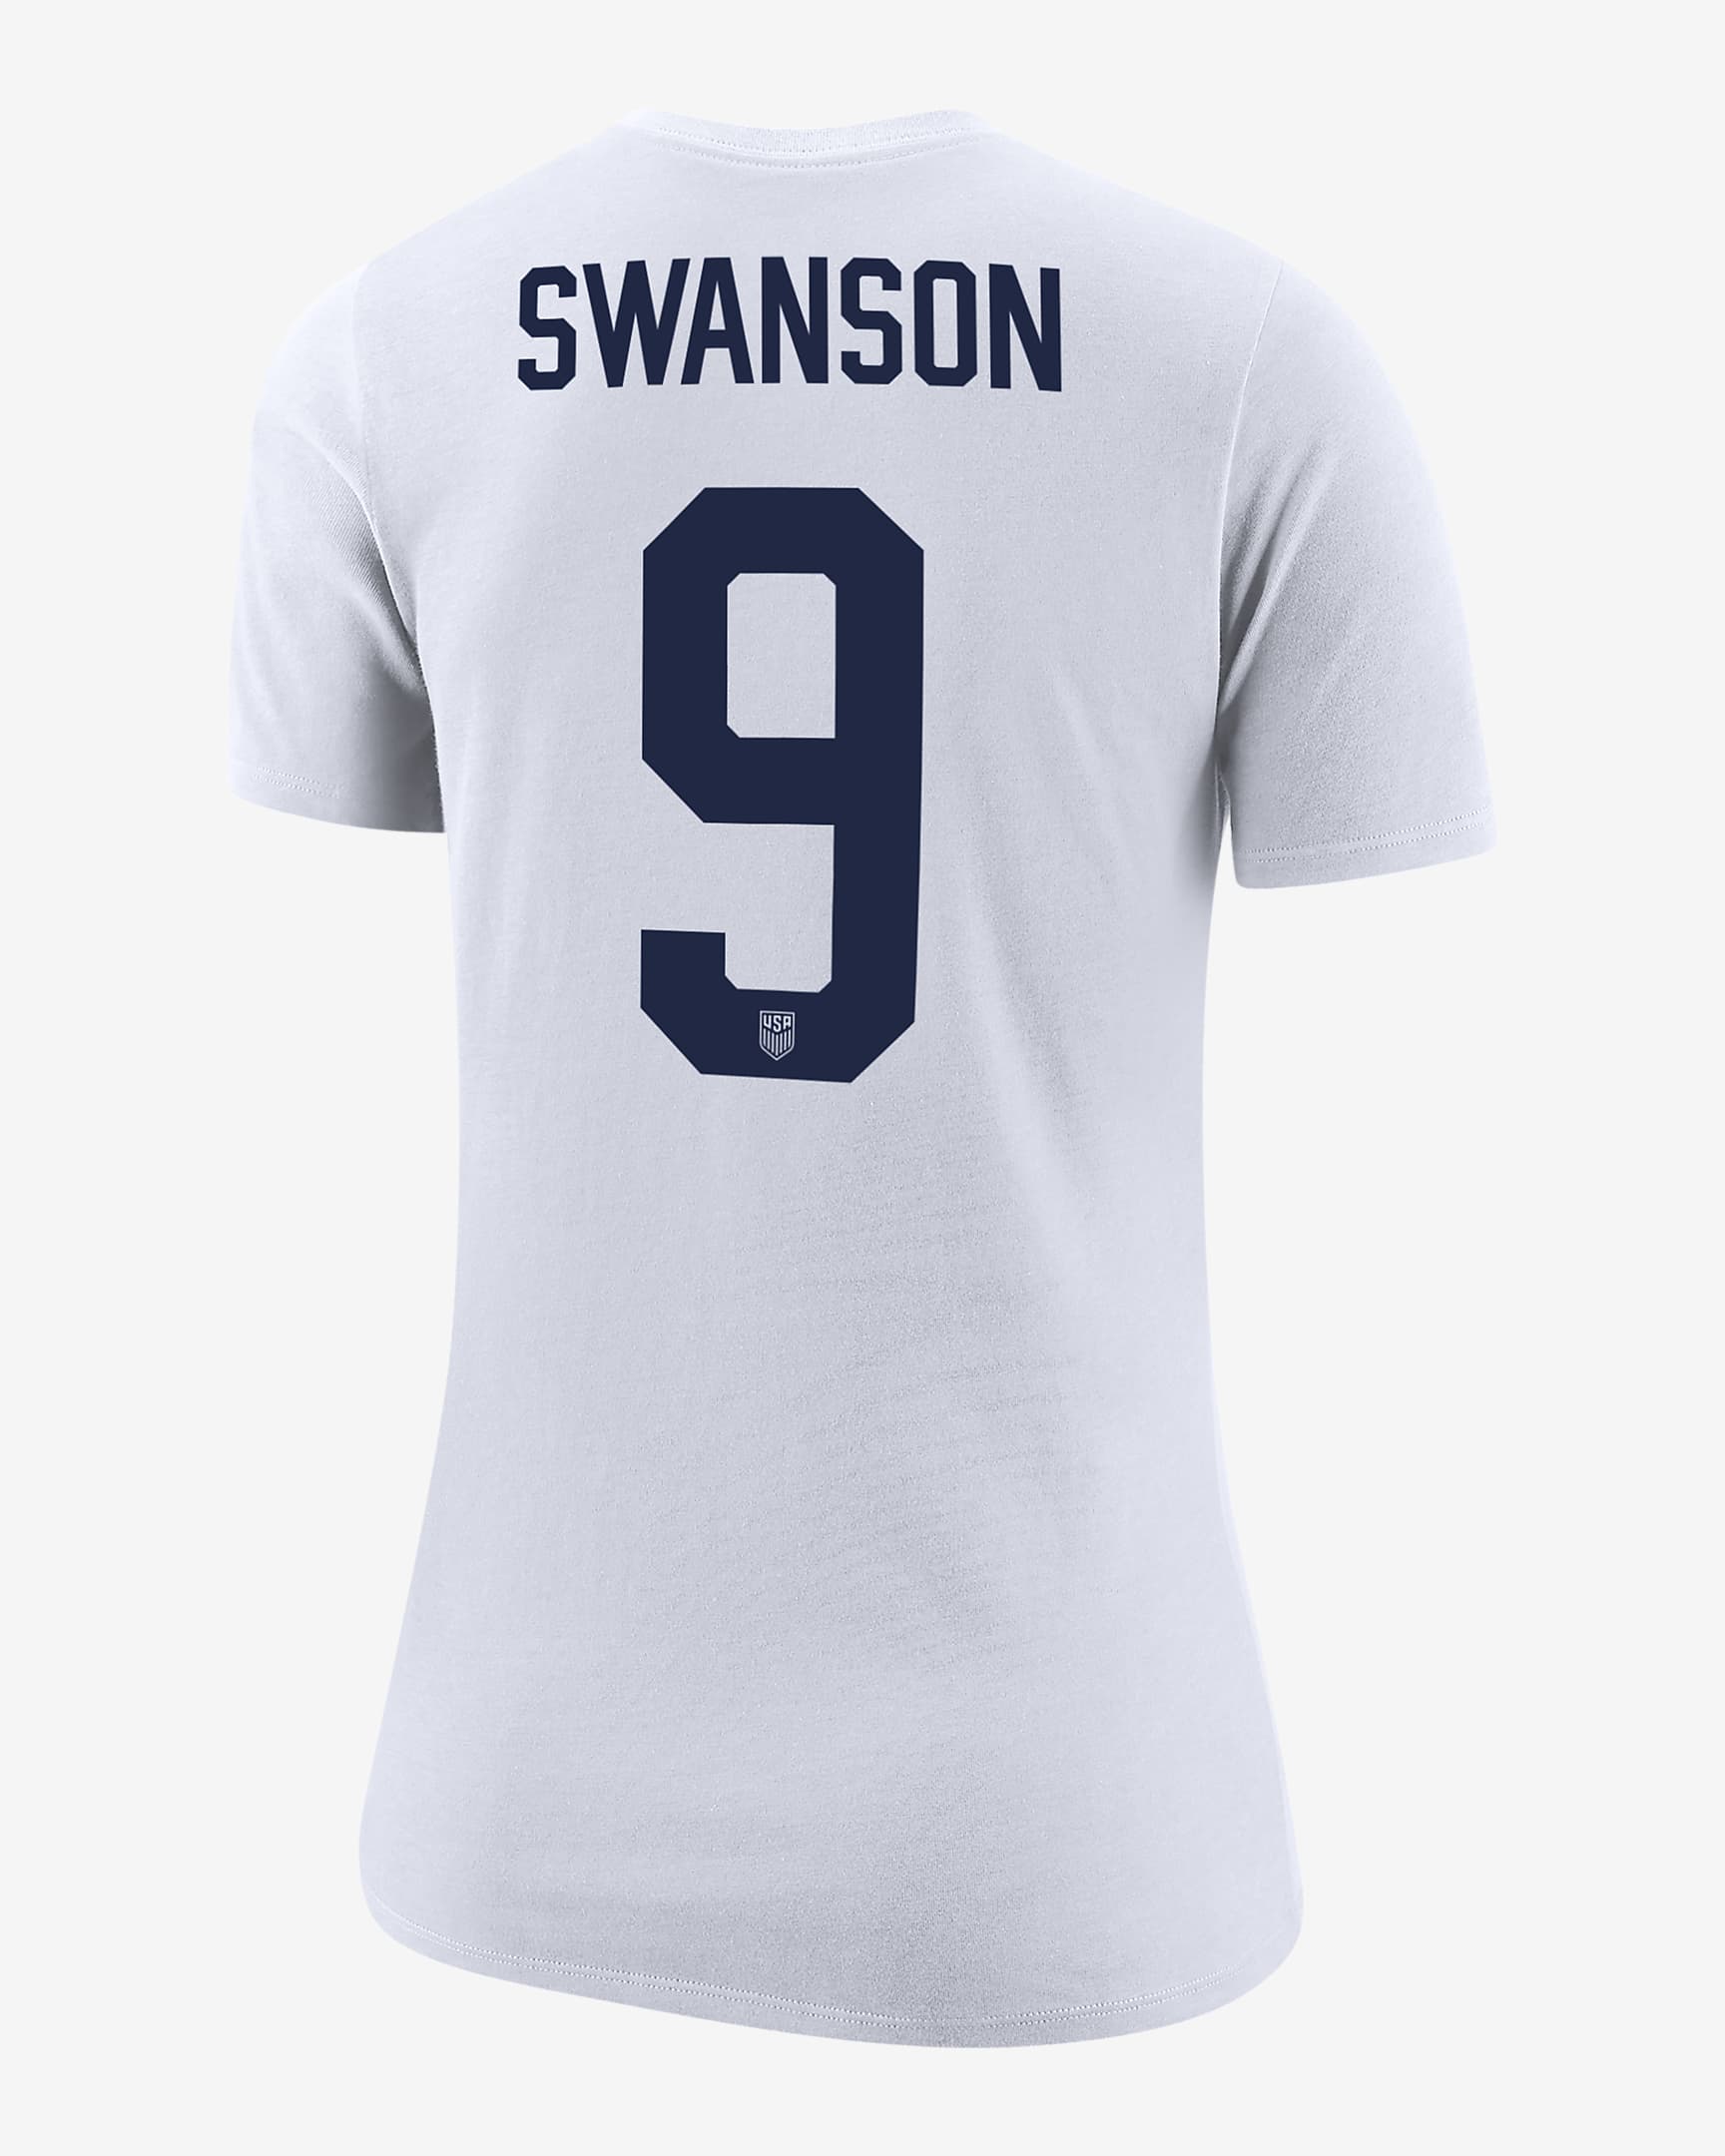 Mallory Swanson USWNT Women's Nike Soccer T-Shirt. Nike.com